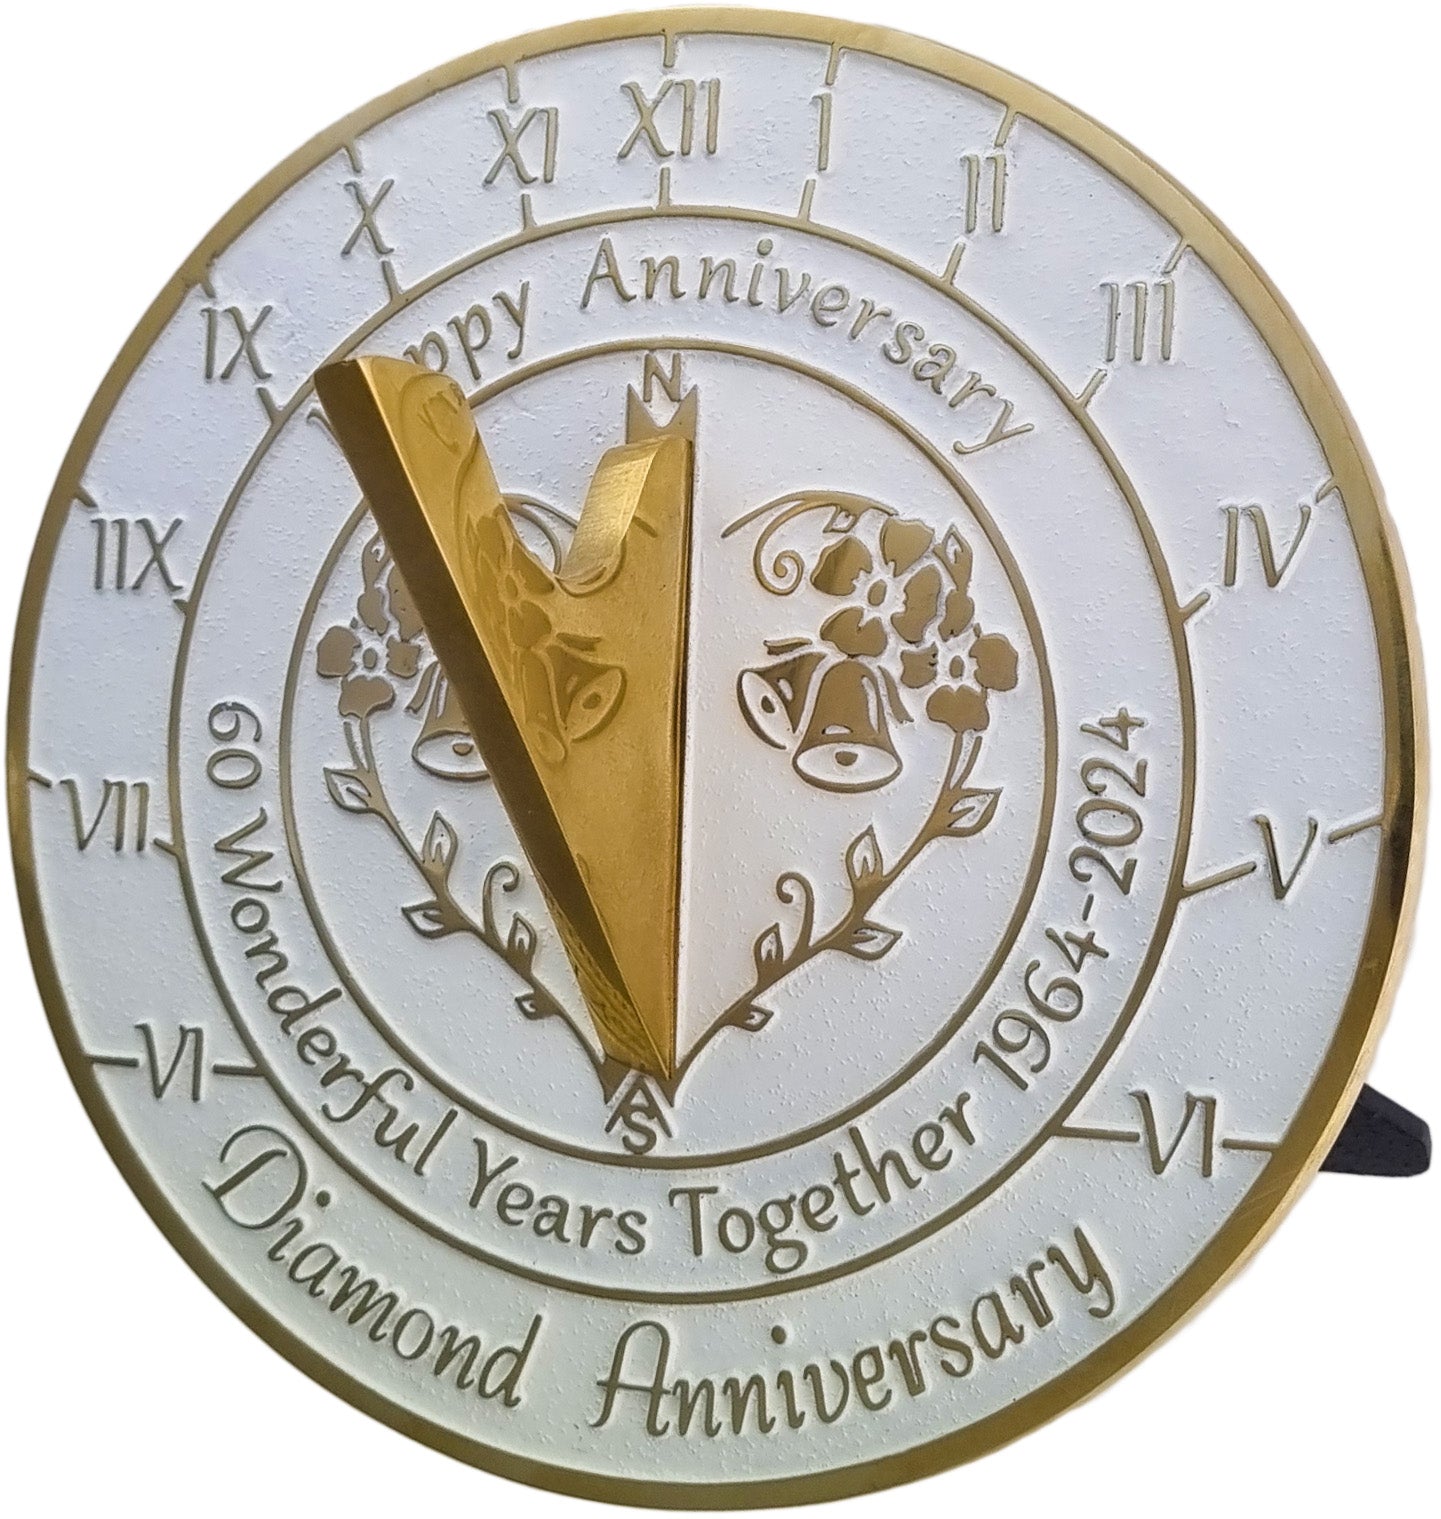 Diamond 60th Anniversary Sundial Gift - The Metal Foundry